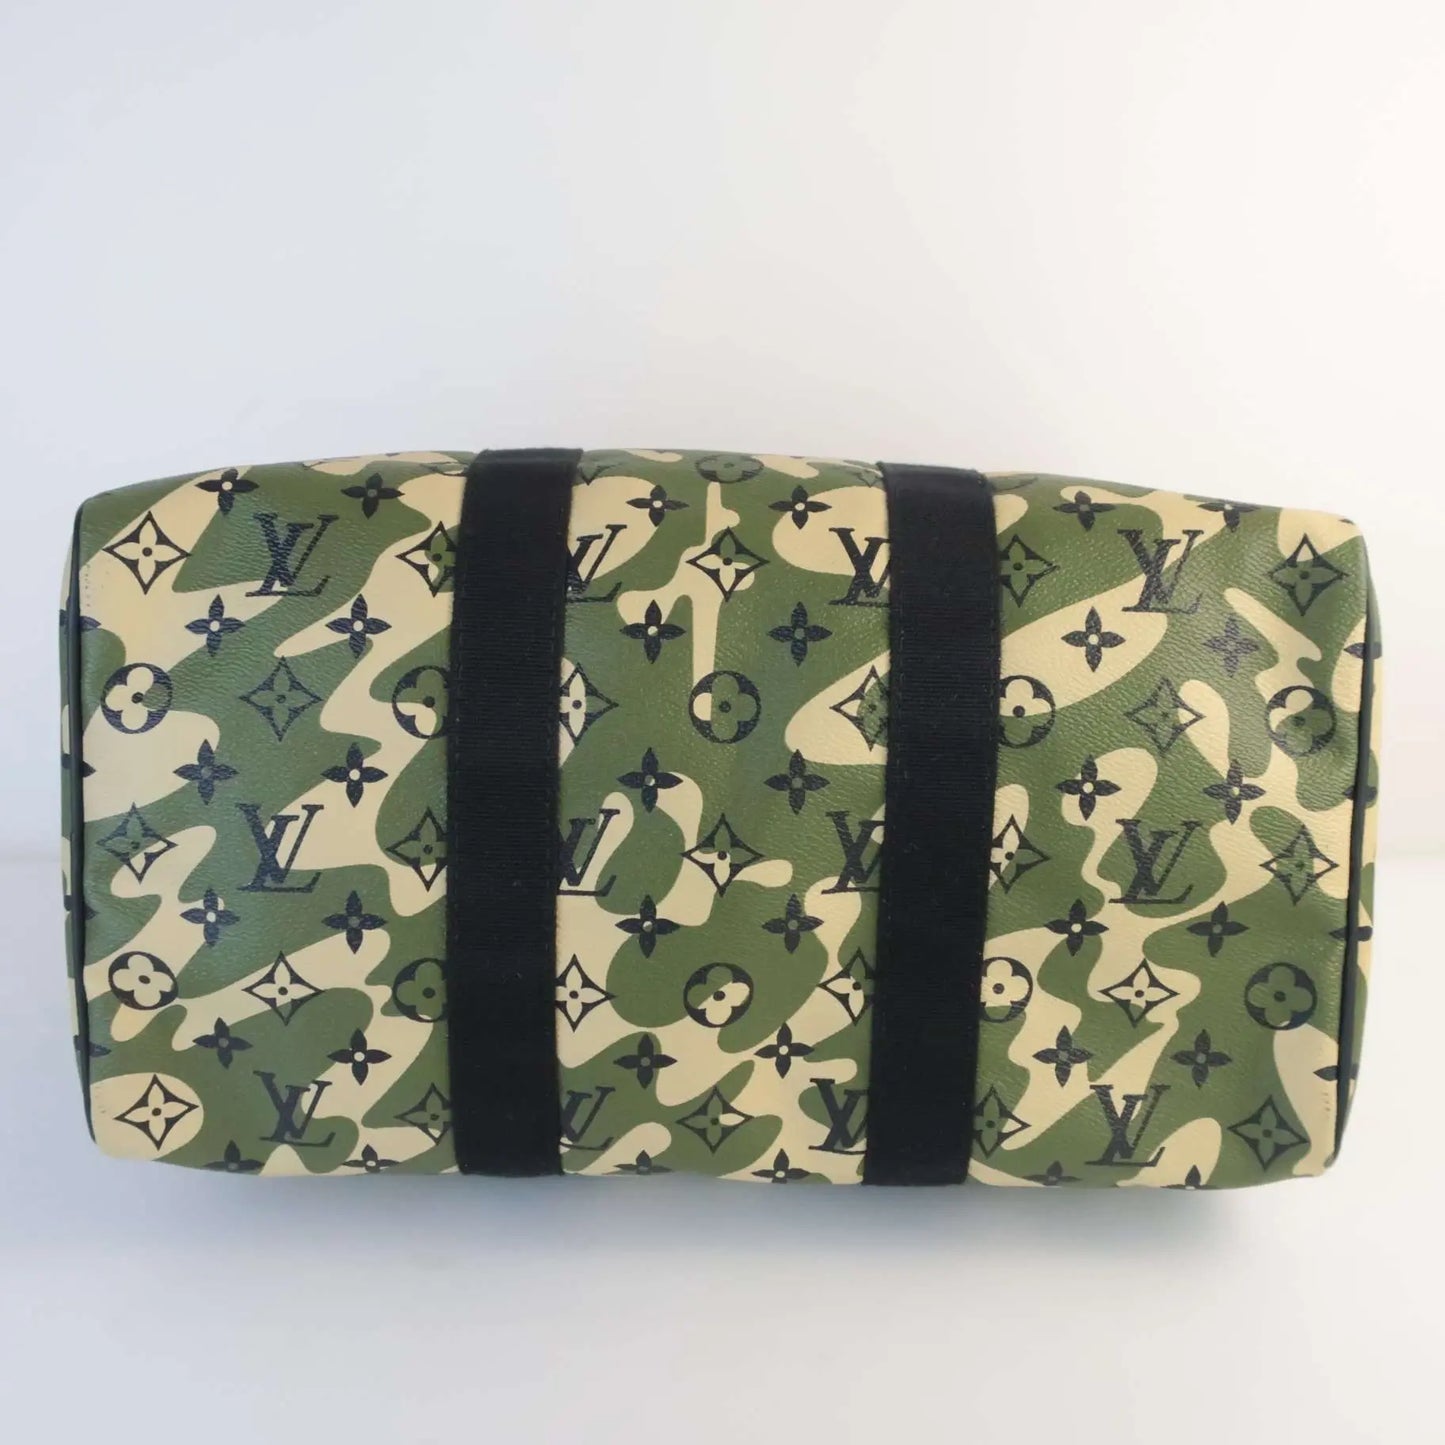 Authentic LOUIS VUITTON Speedy Bag Monogram Camouflage 35